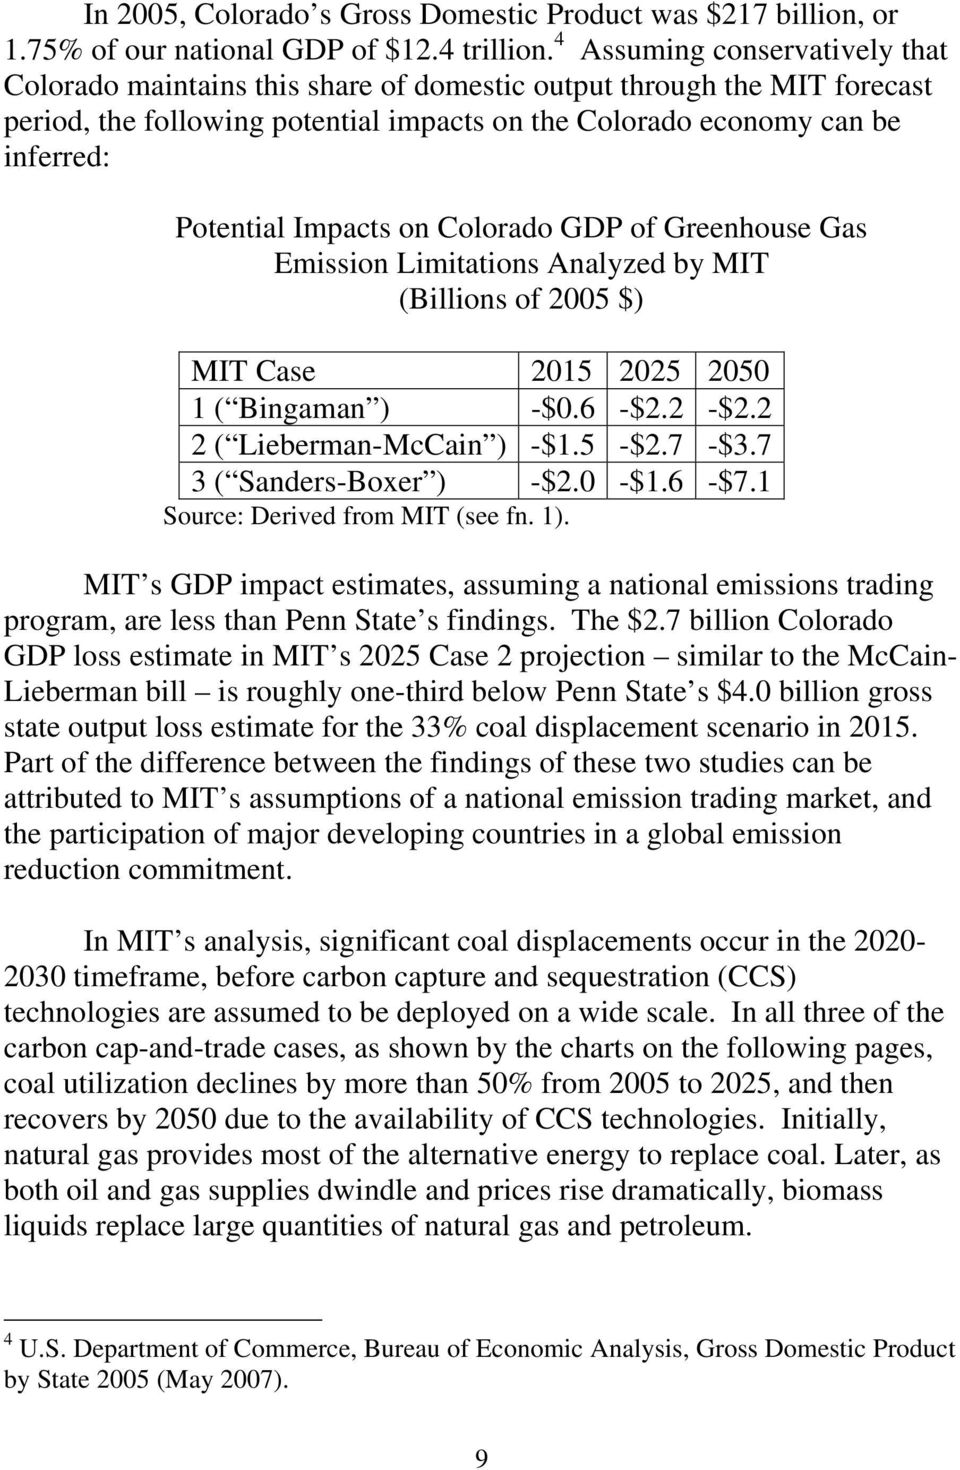 Impacts on Colorado GDP of Greenhouse Gas Emission Limitations Analyzed by MIT (Billions of 2005 $) MIT Case 2015 2025 2050 1 ( Bingaman ) -$0.6 -$2.2 -$2.2 2 ( Lieberman-McCain ) -$1.5 -$2.7 -$3.